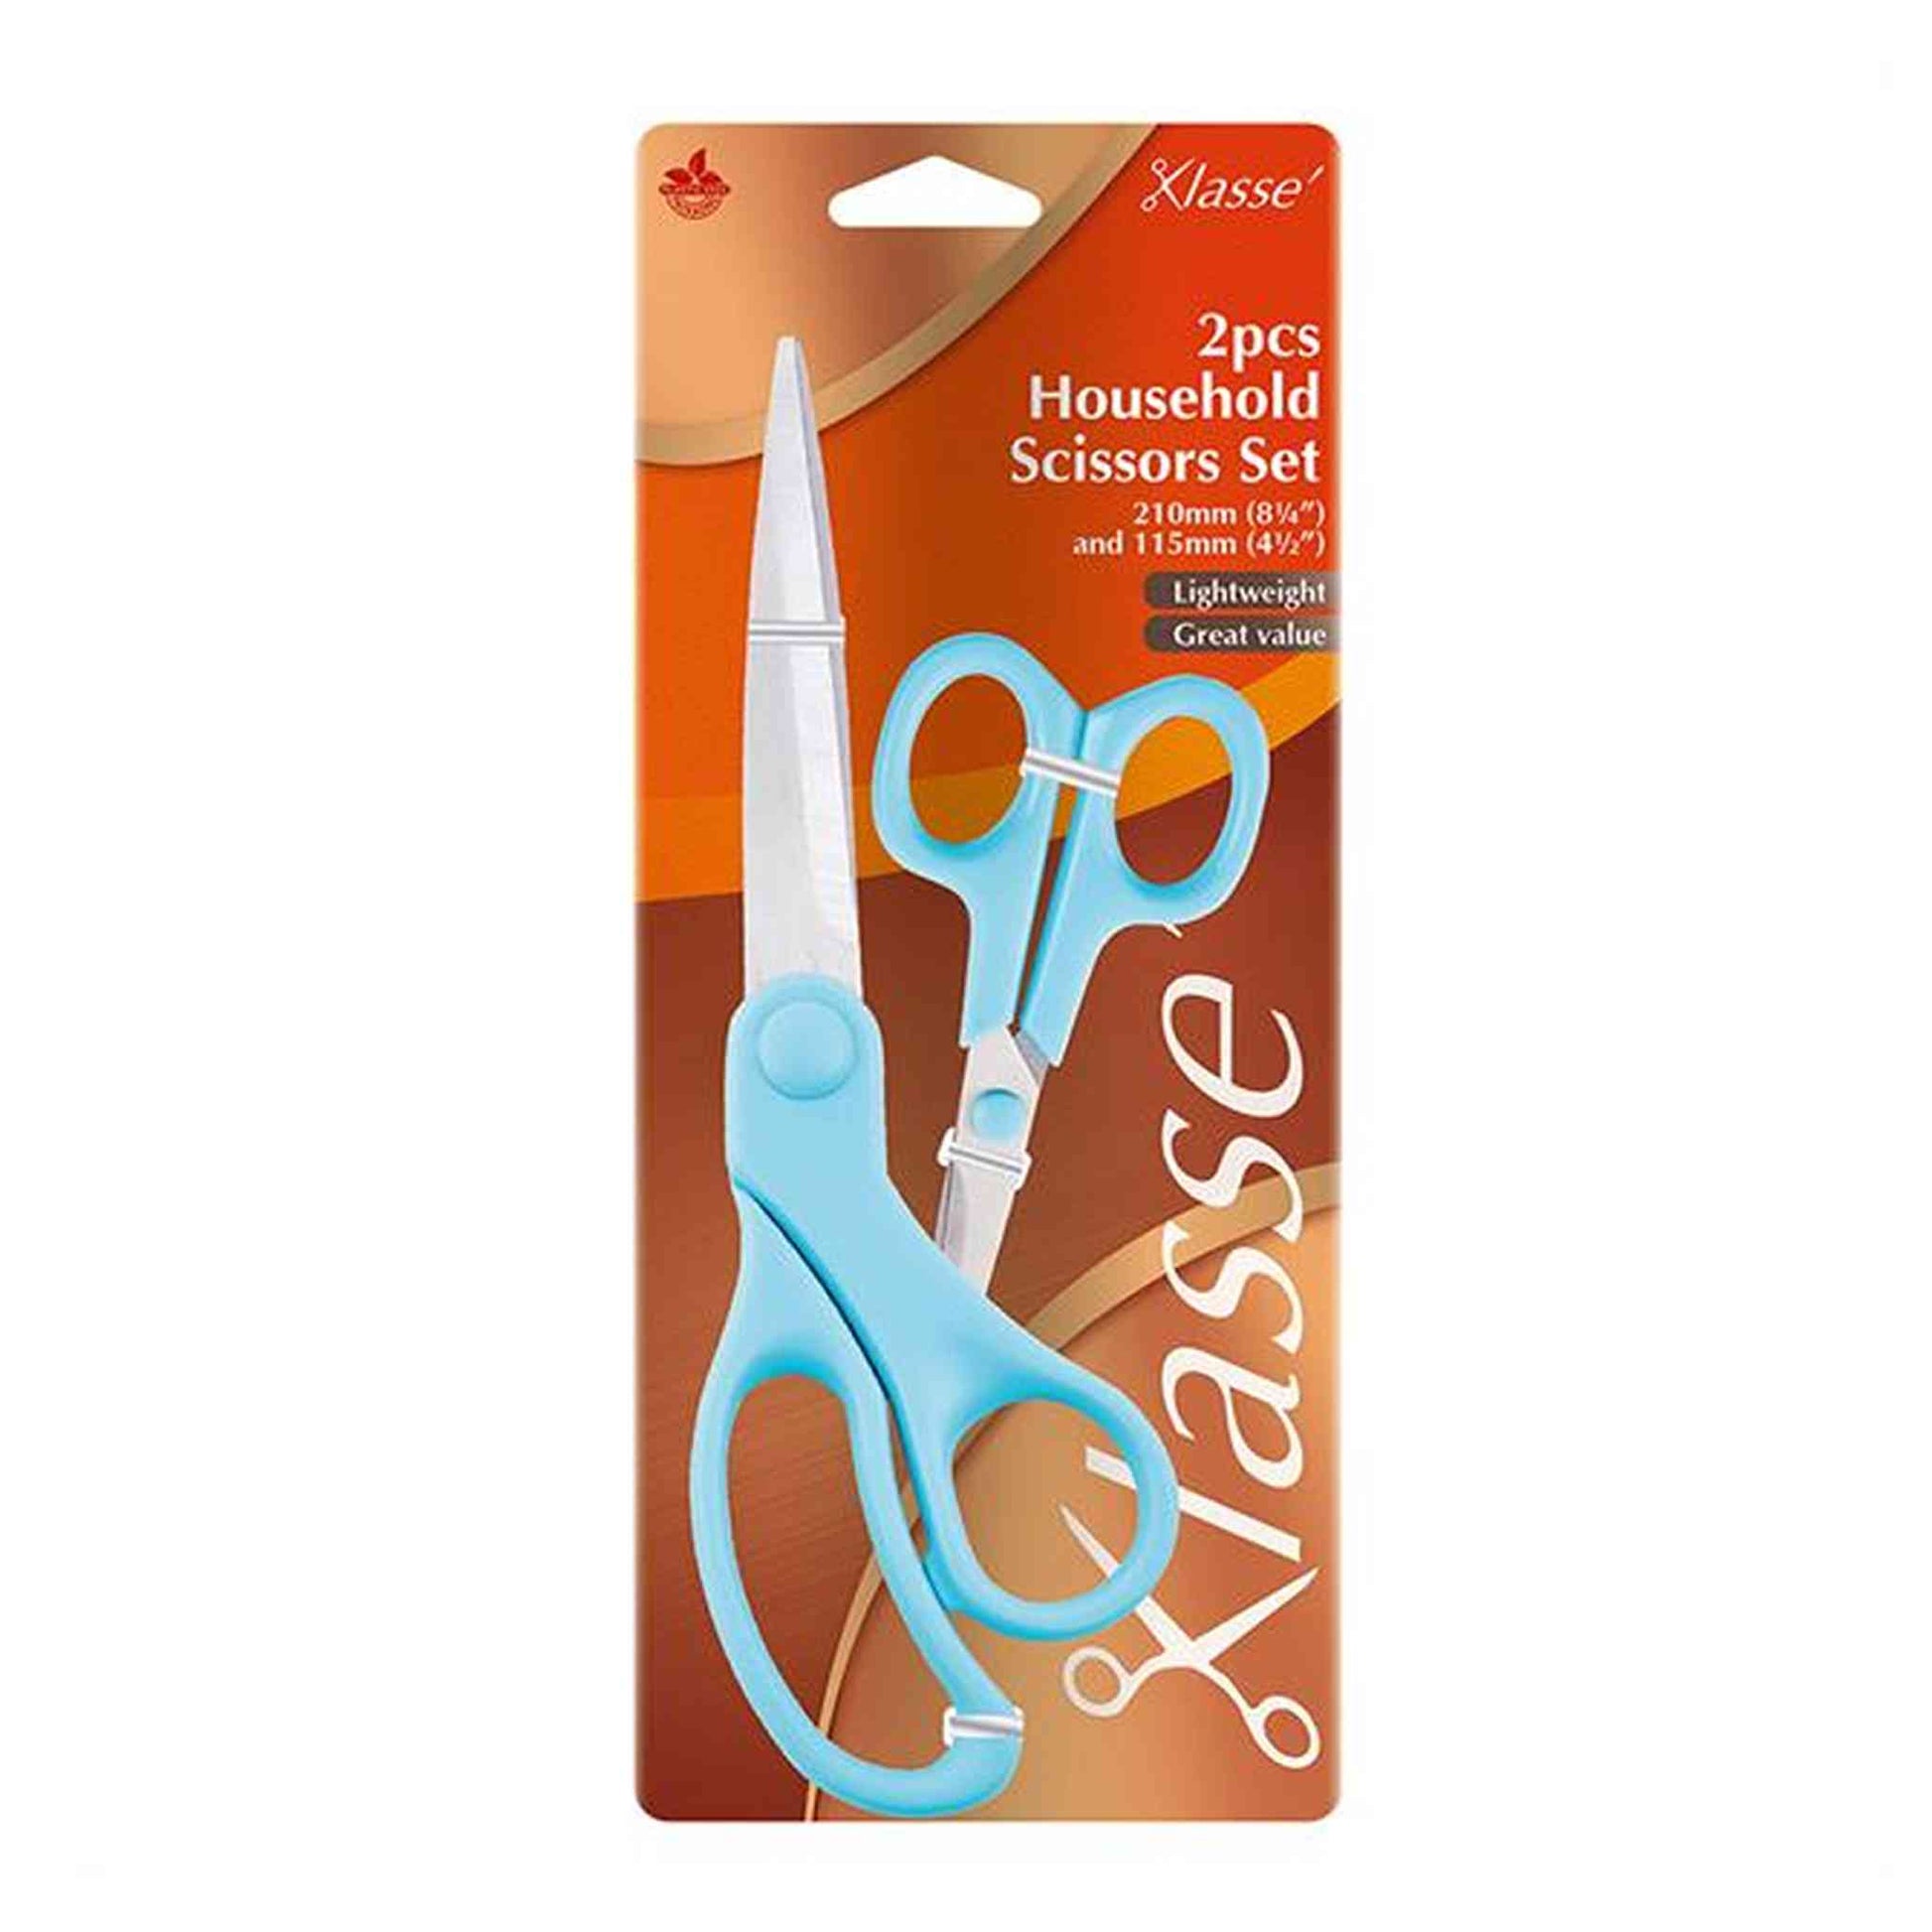 Klasse 2 piece household scissors set. Small 115mm and large 210mm length. Cardboard packaging.blue-handles